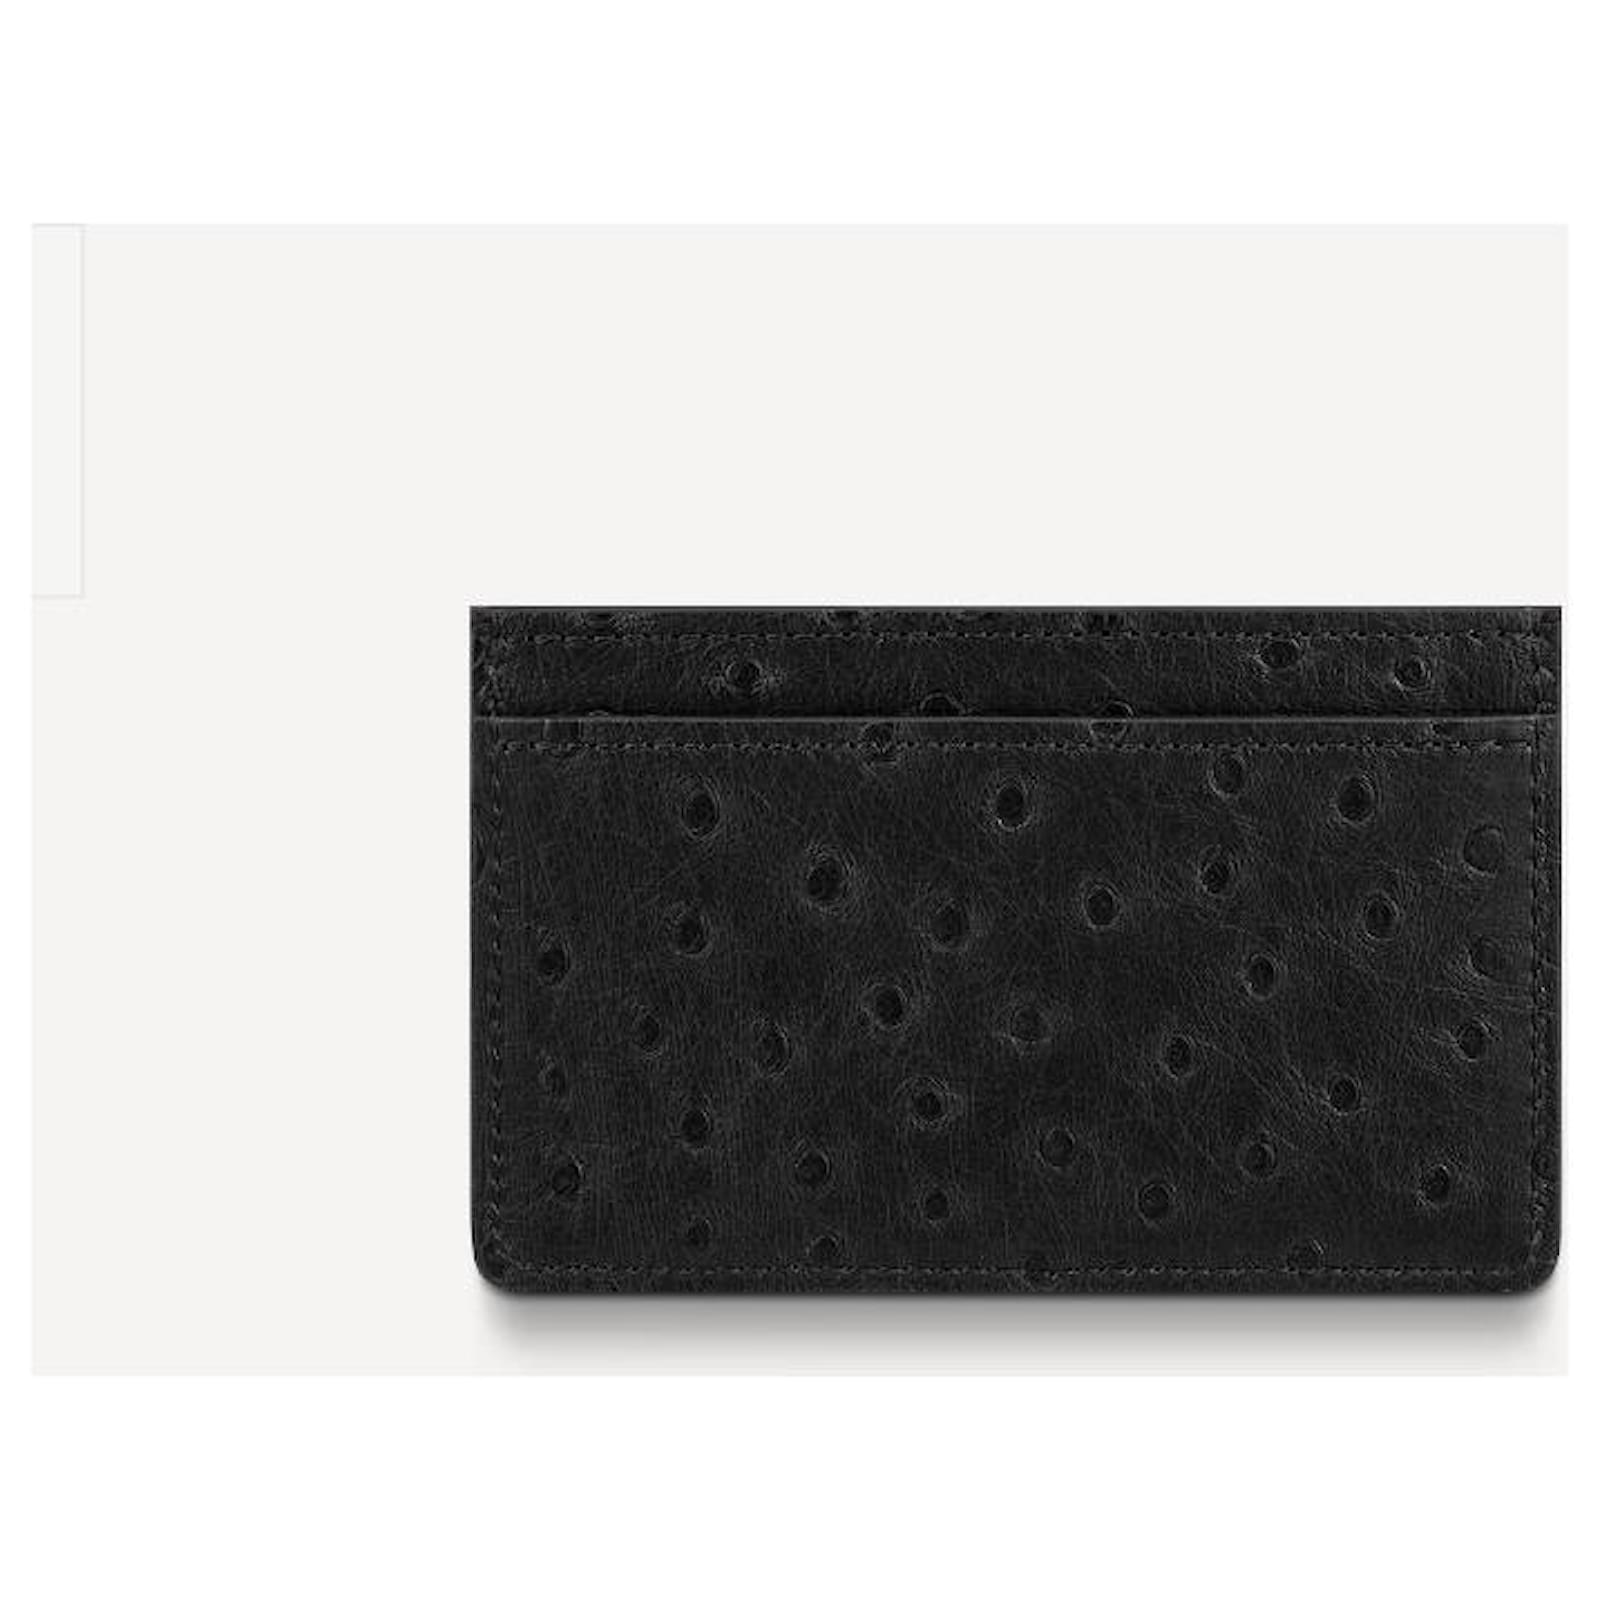 Louis Vuitton Double Card Holder, Multi